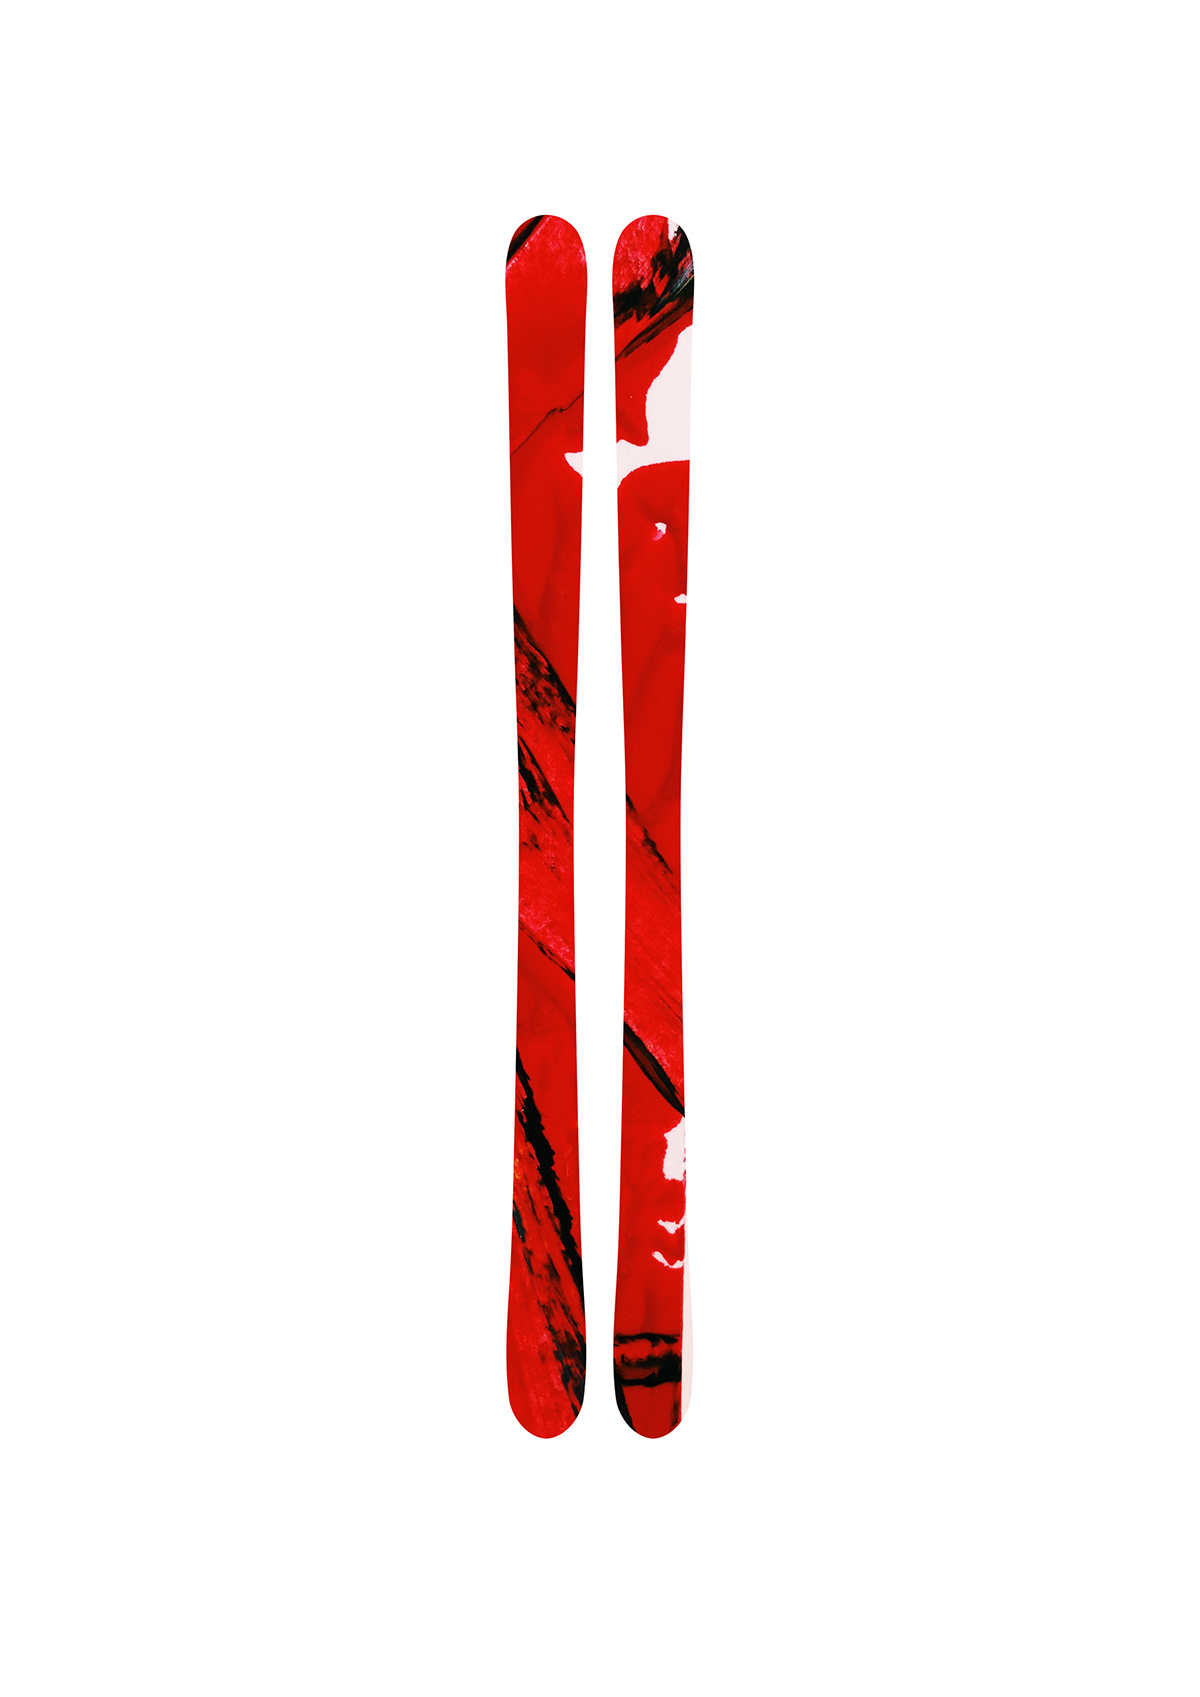 ski design graphic design  Digital Art  Ski's aesthetic